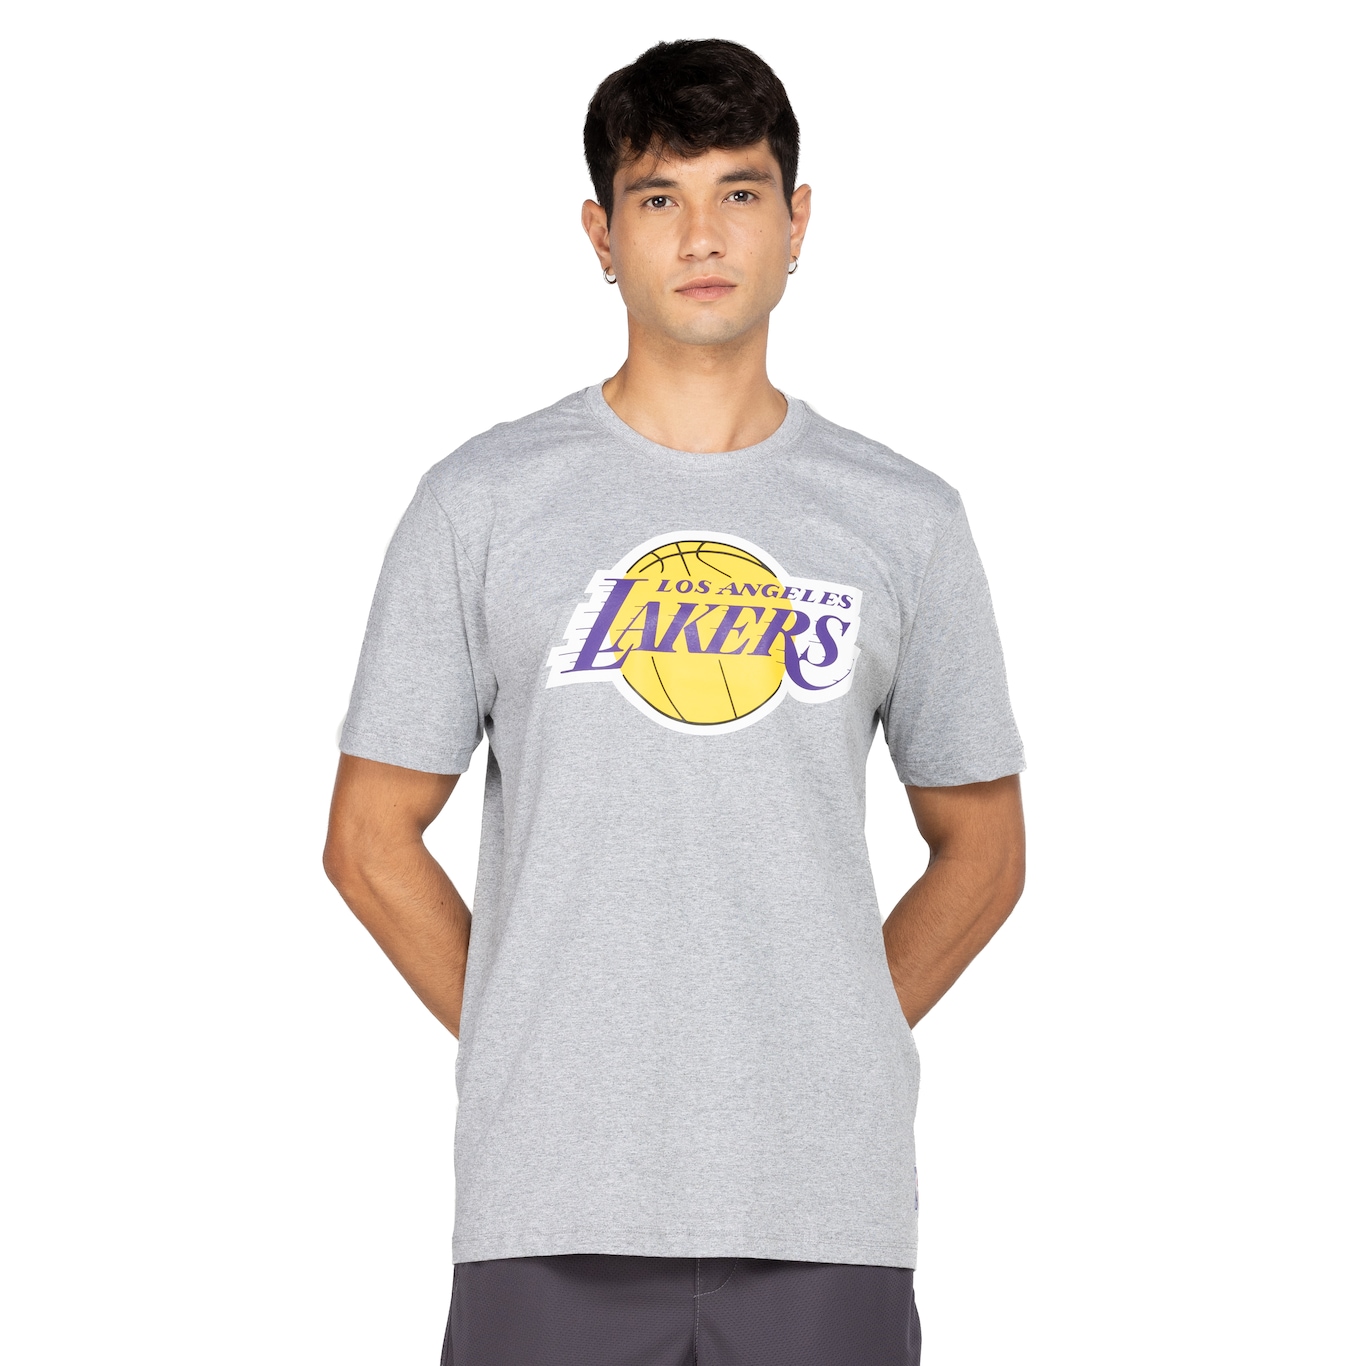 Bola de Basquete Los Angeles Lakers Lebron James 6 Wilson NBA em